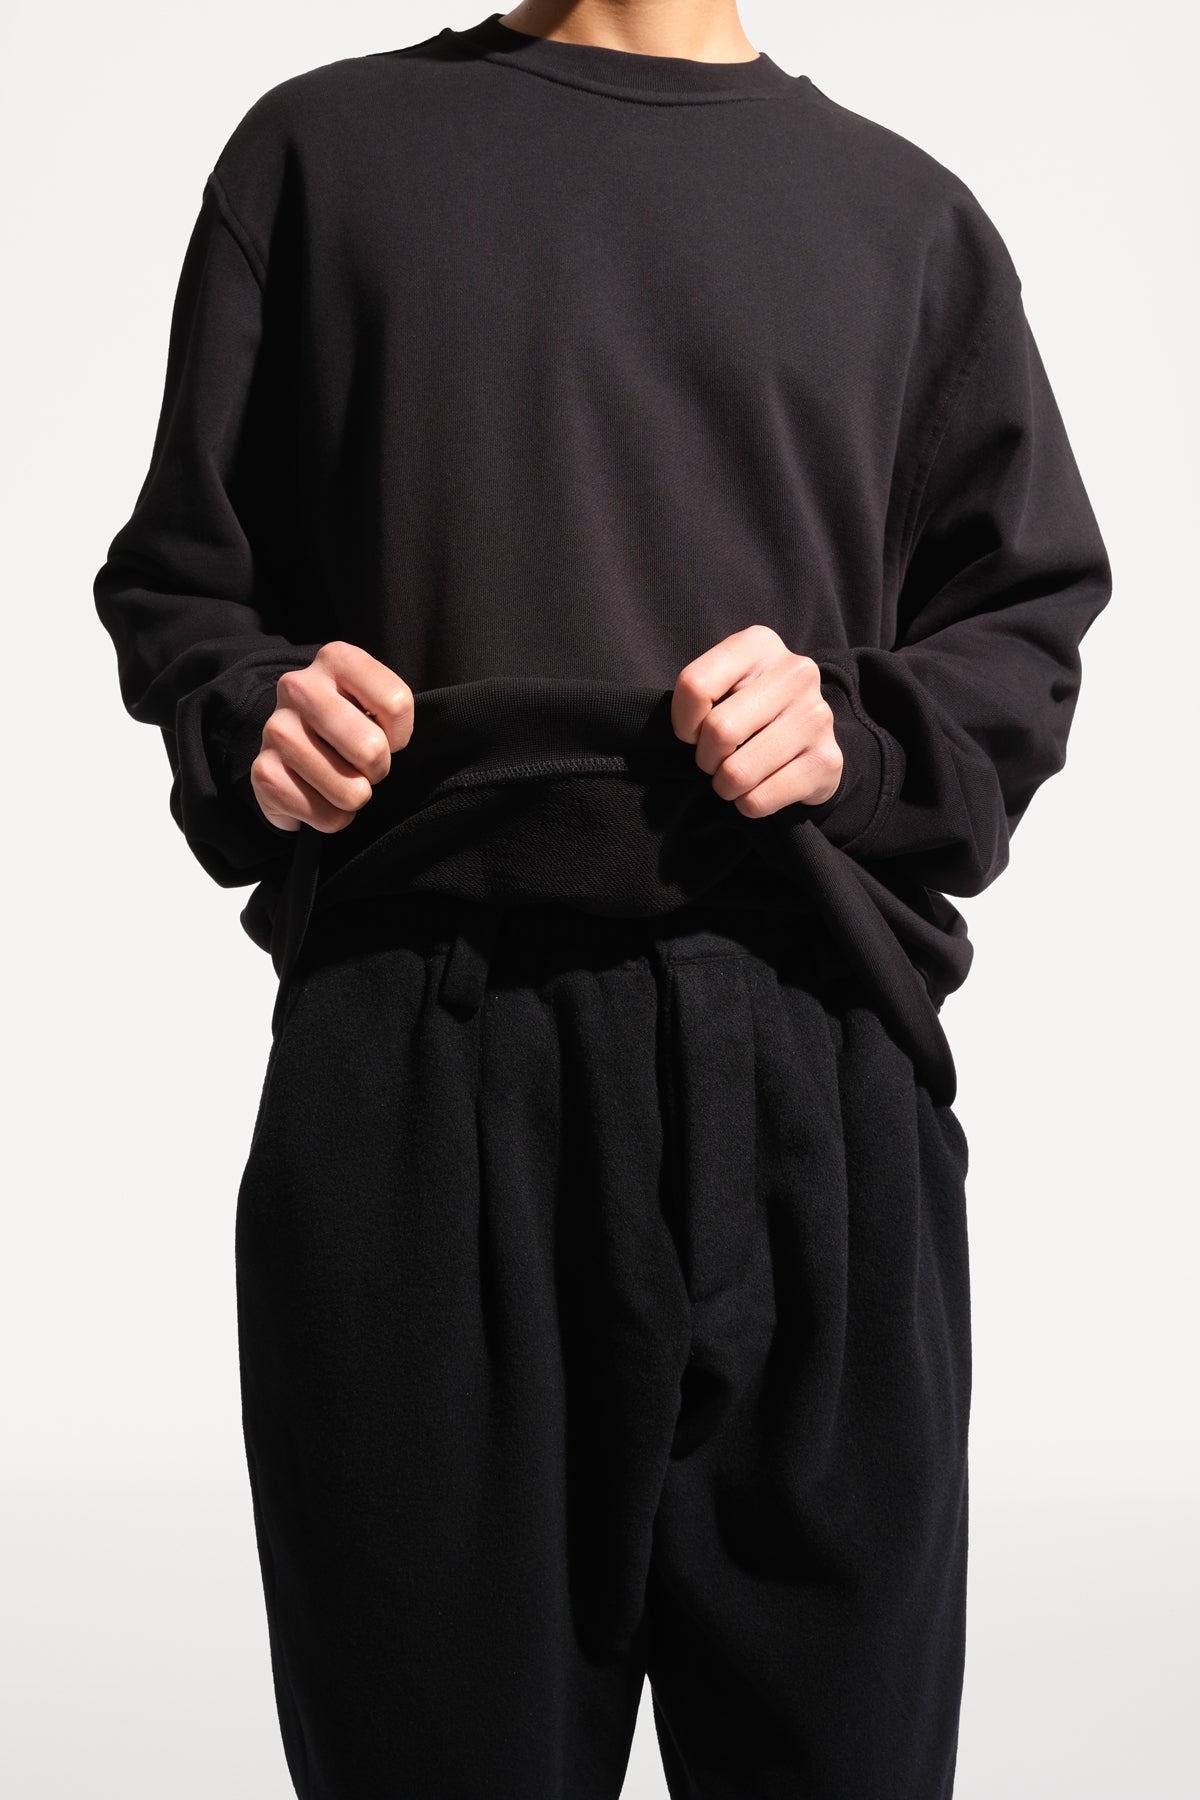 oftt - 02- reversible sweatshirt - black - organic cotton fleece - image 7